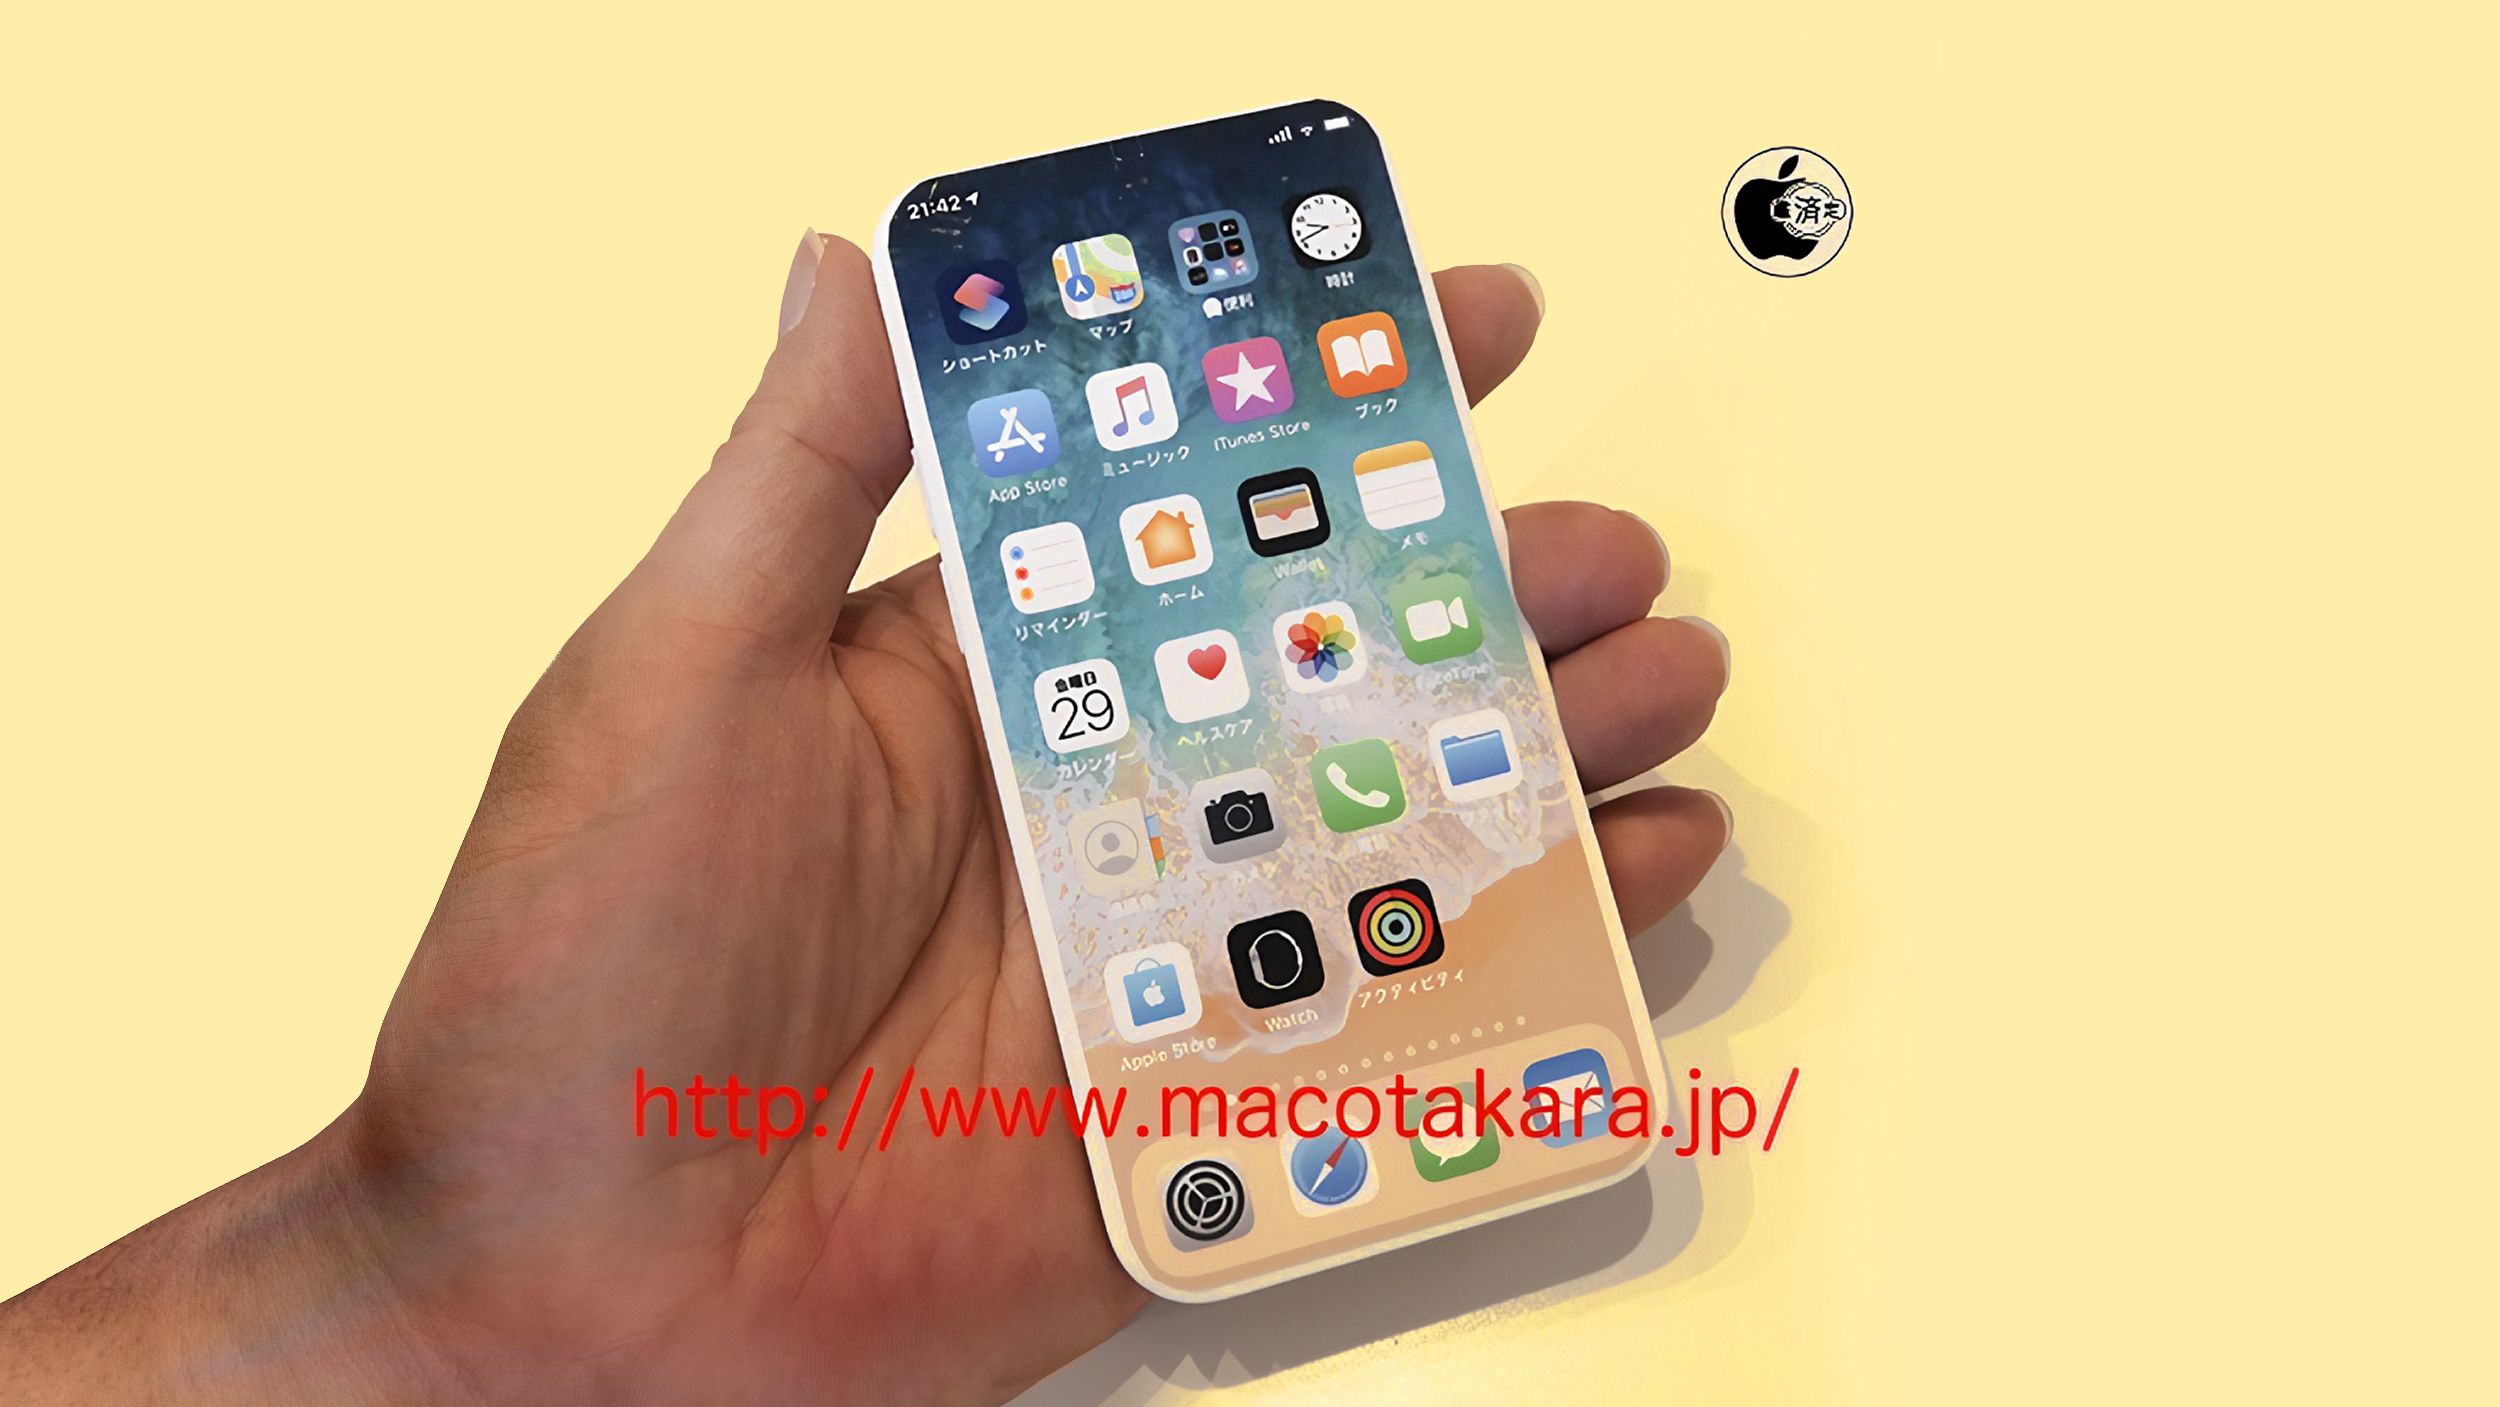 Айфон 13 в казахстане